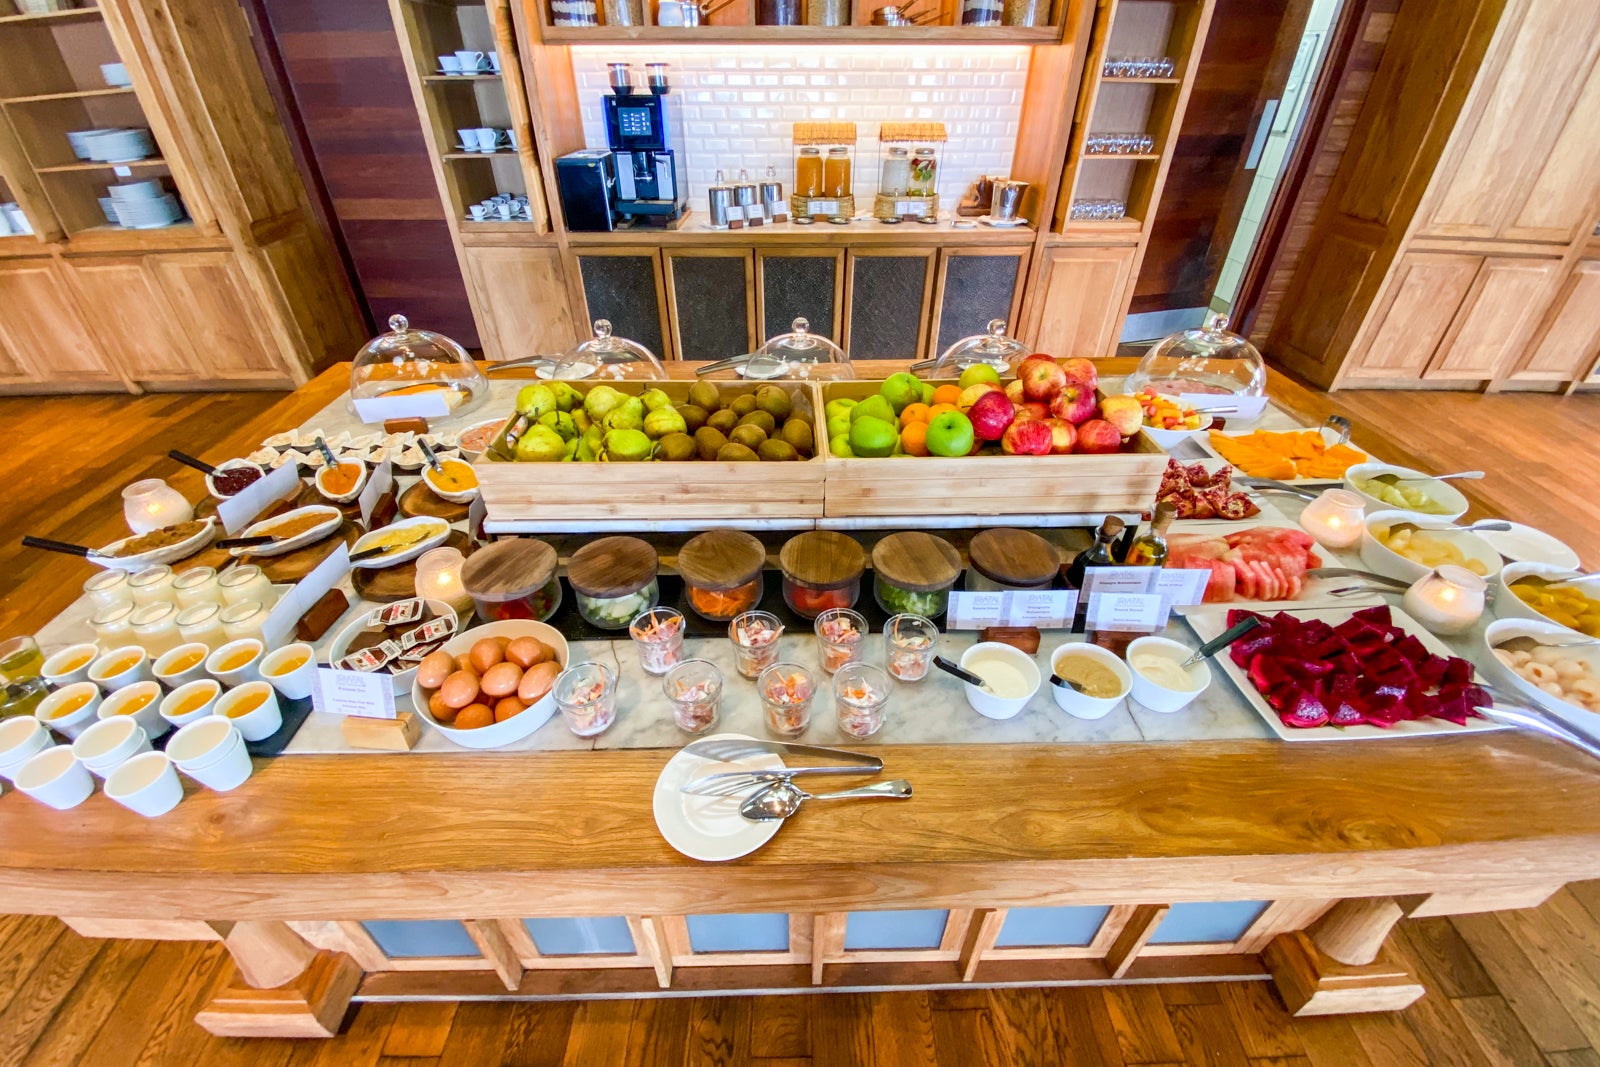 A breakfast spread at a Hilton property